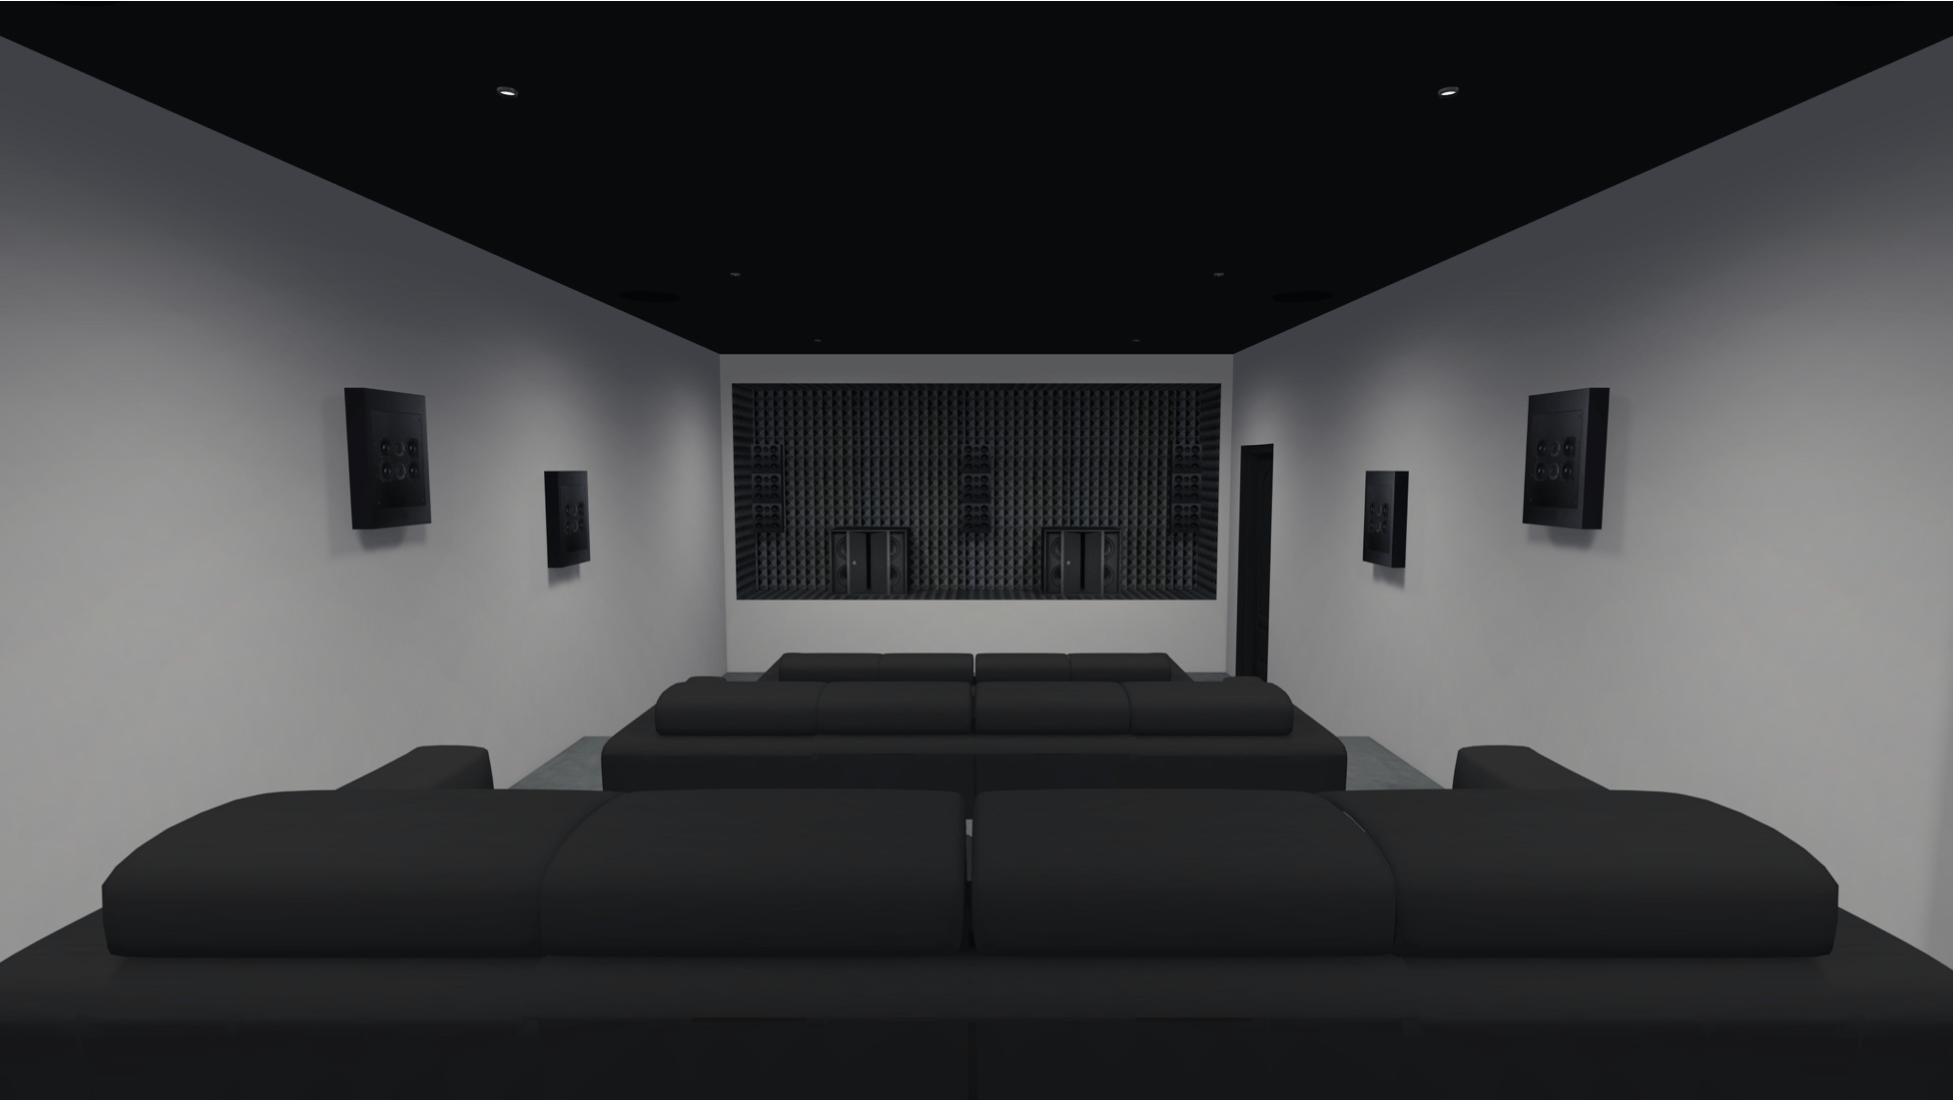 Dedicated Home Cinema System - Basement cinema room